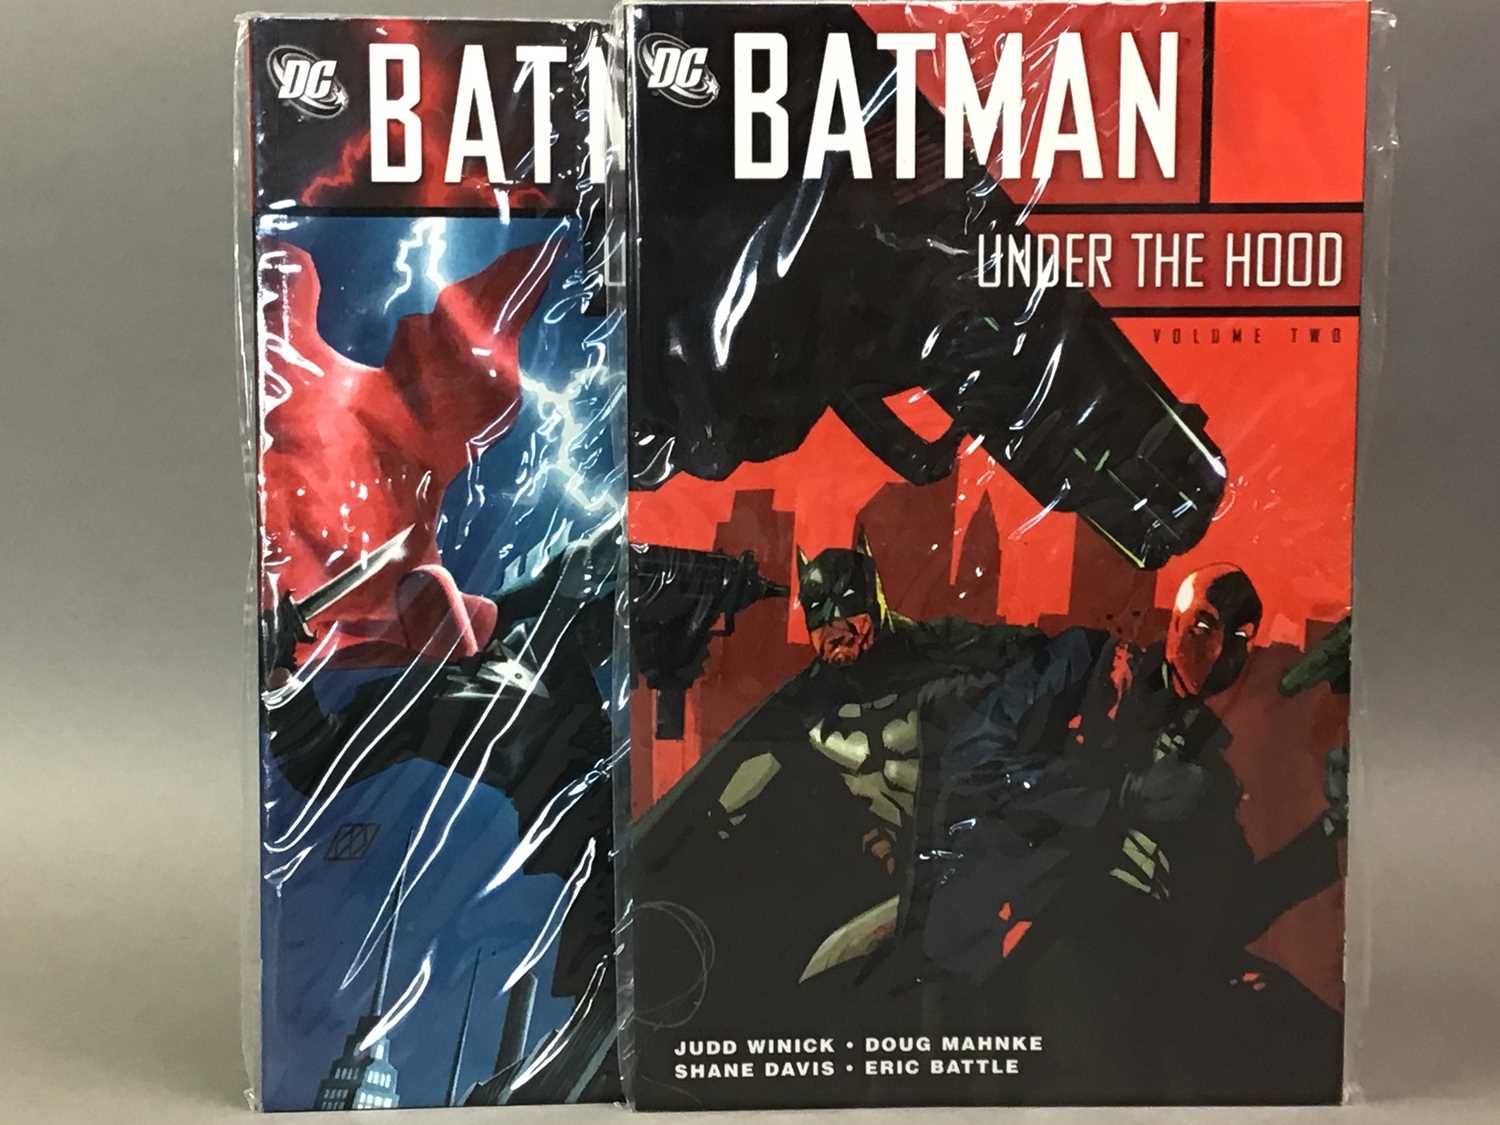 Lot 1 - DC COMICS, COLLECTION OF BATMAN GRAPHIC NOVELS